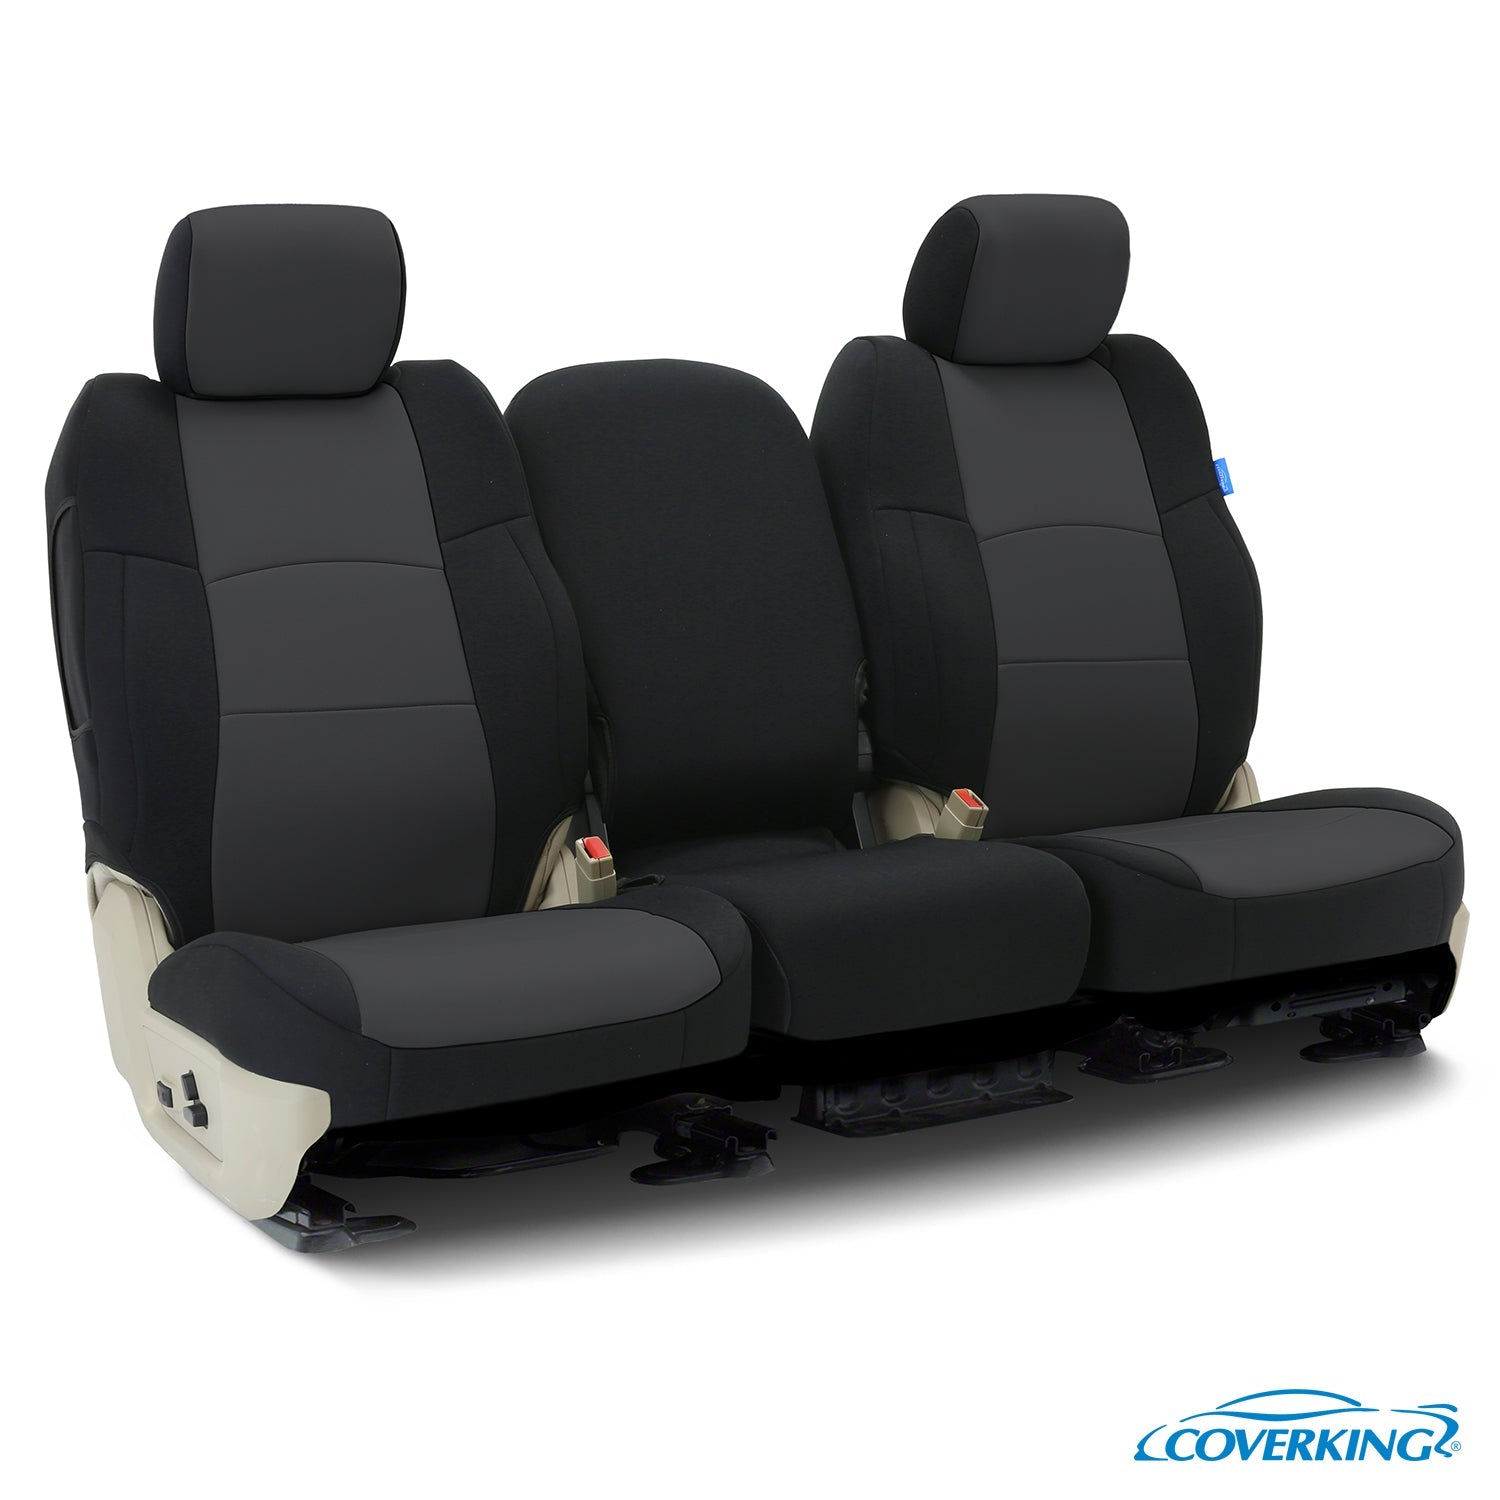 Coverking CR-Grade Neoprene Seat Covers - Partsaccessoriesusa